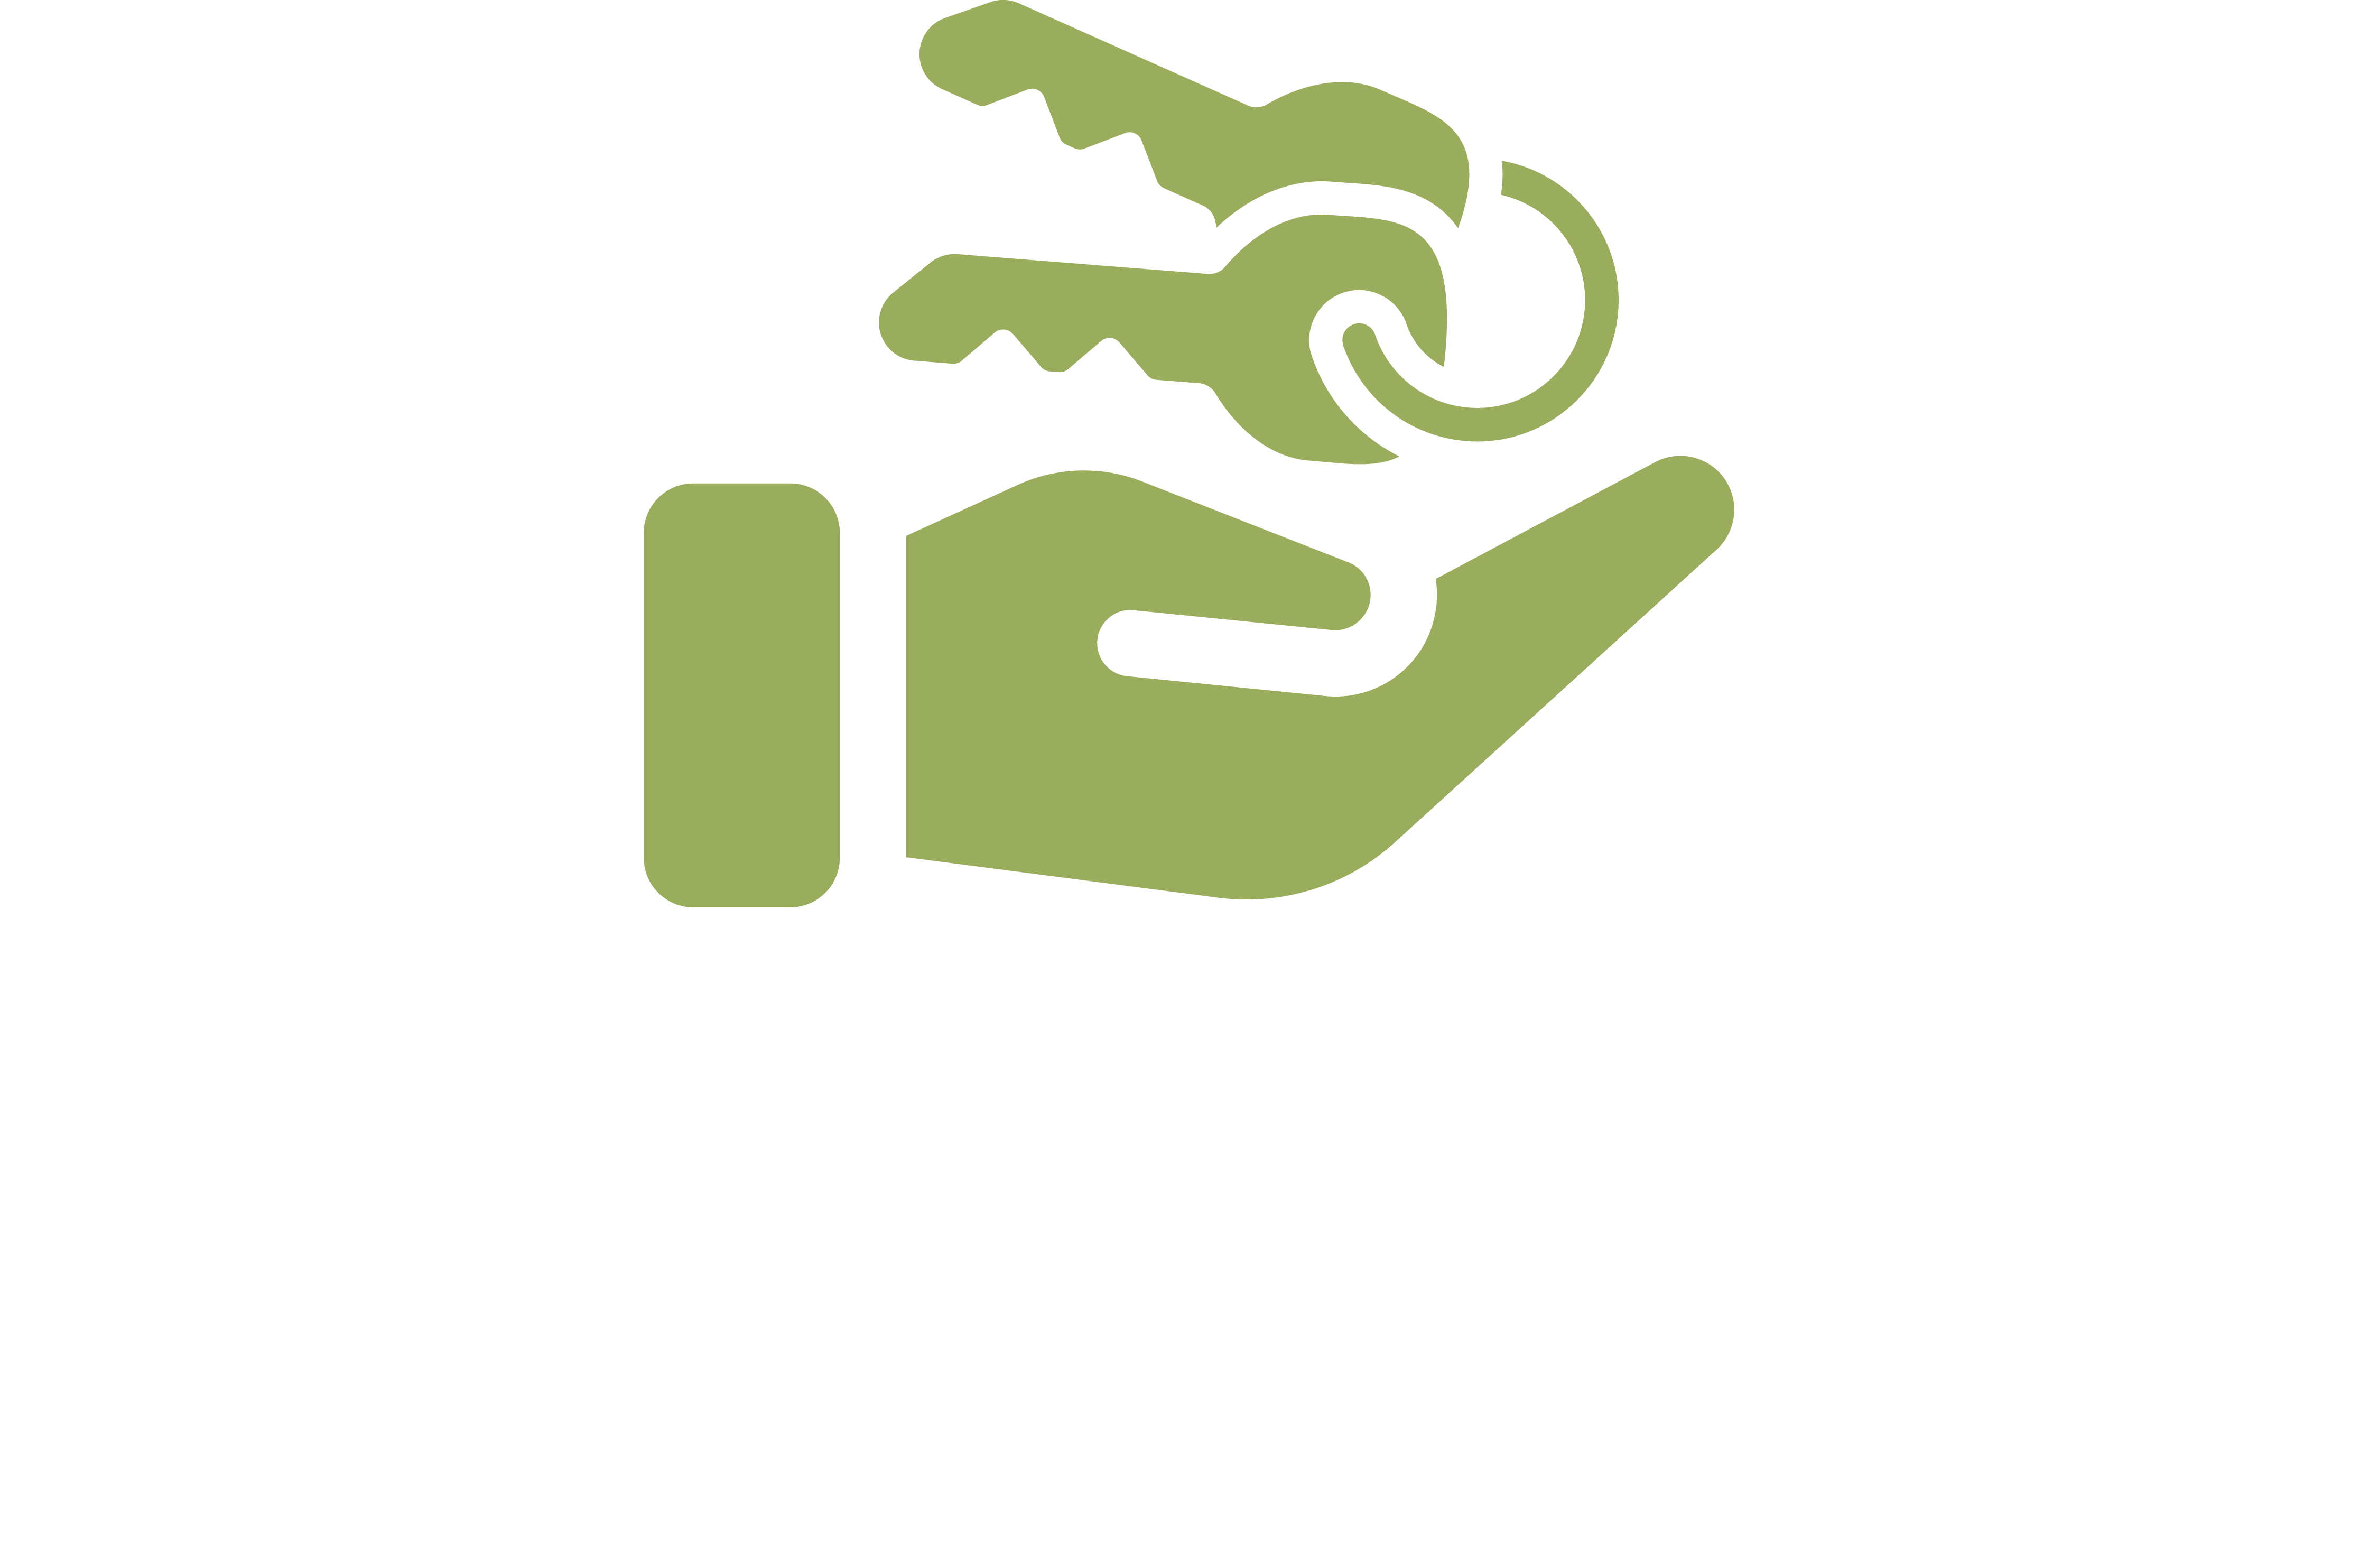 Real estate